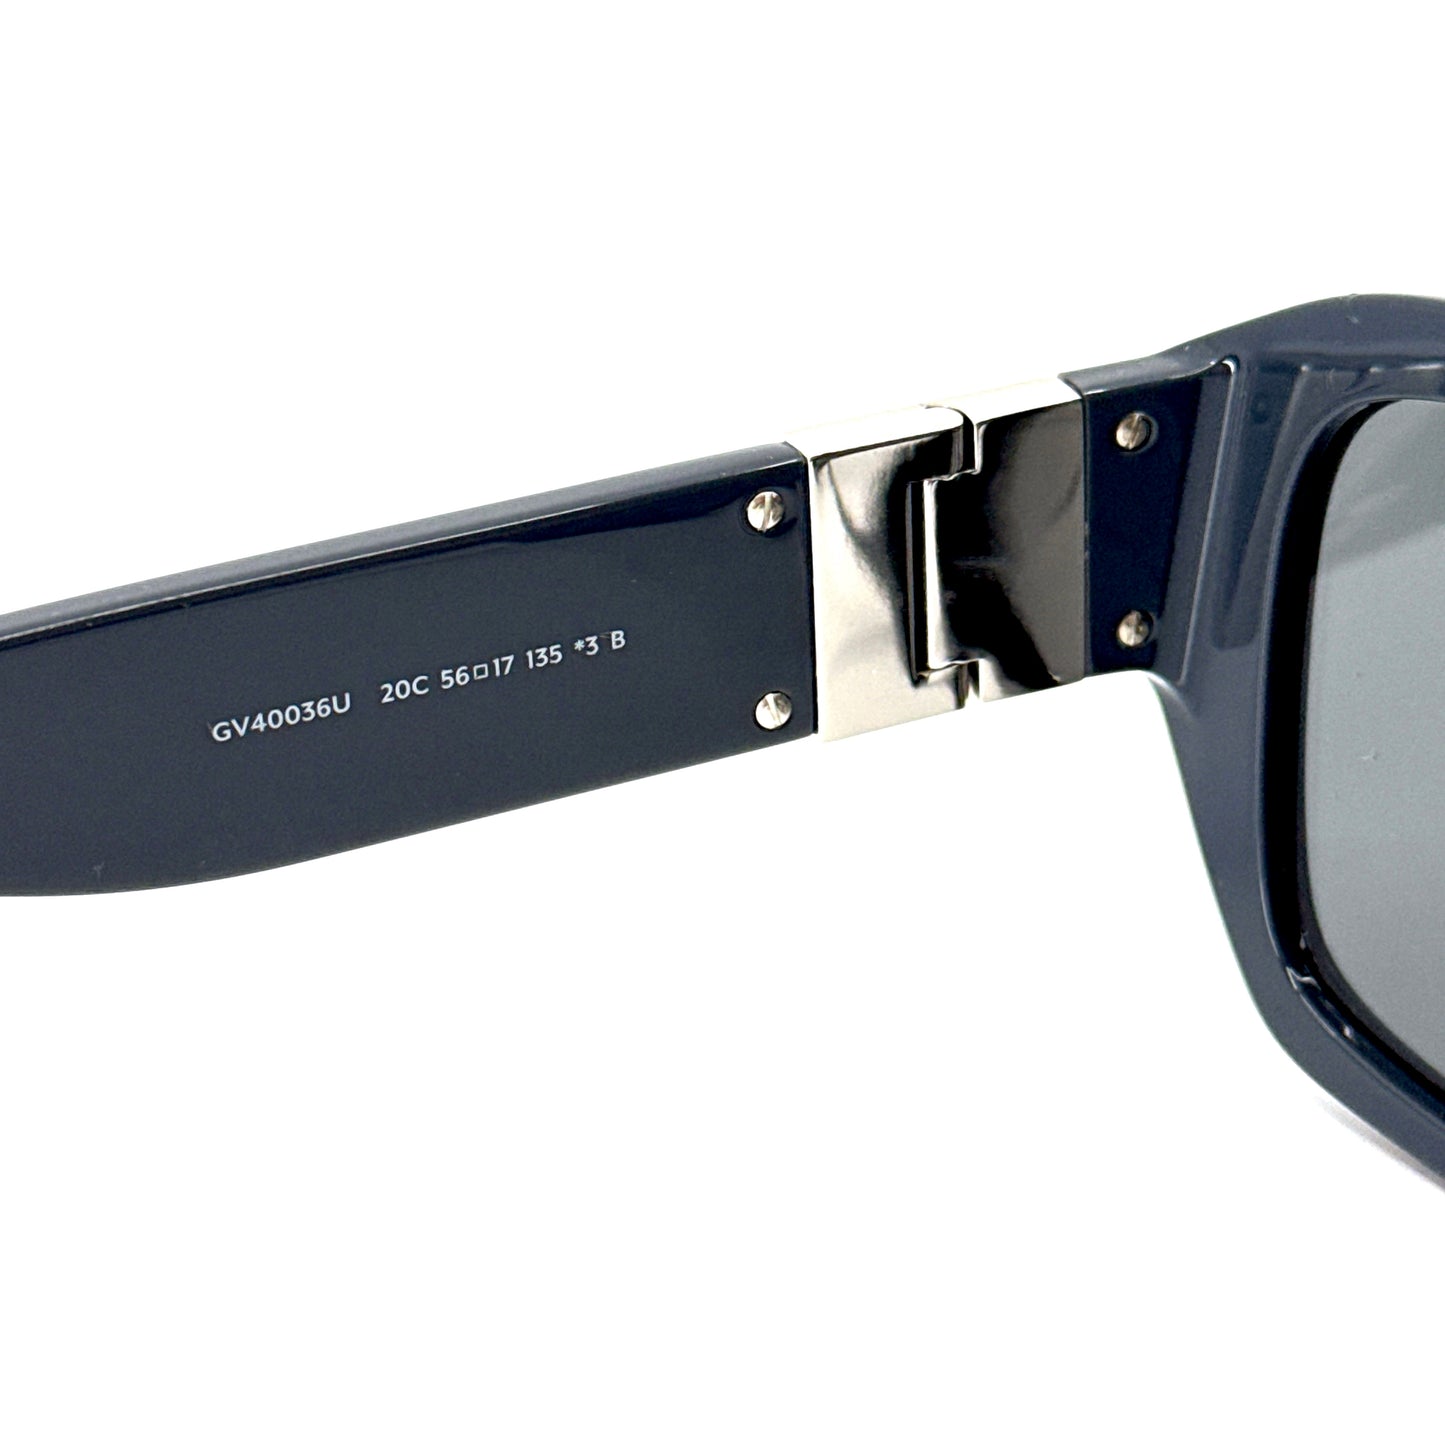 GIVENCHY Sunglasses GV40036U 20C